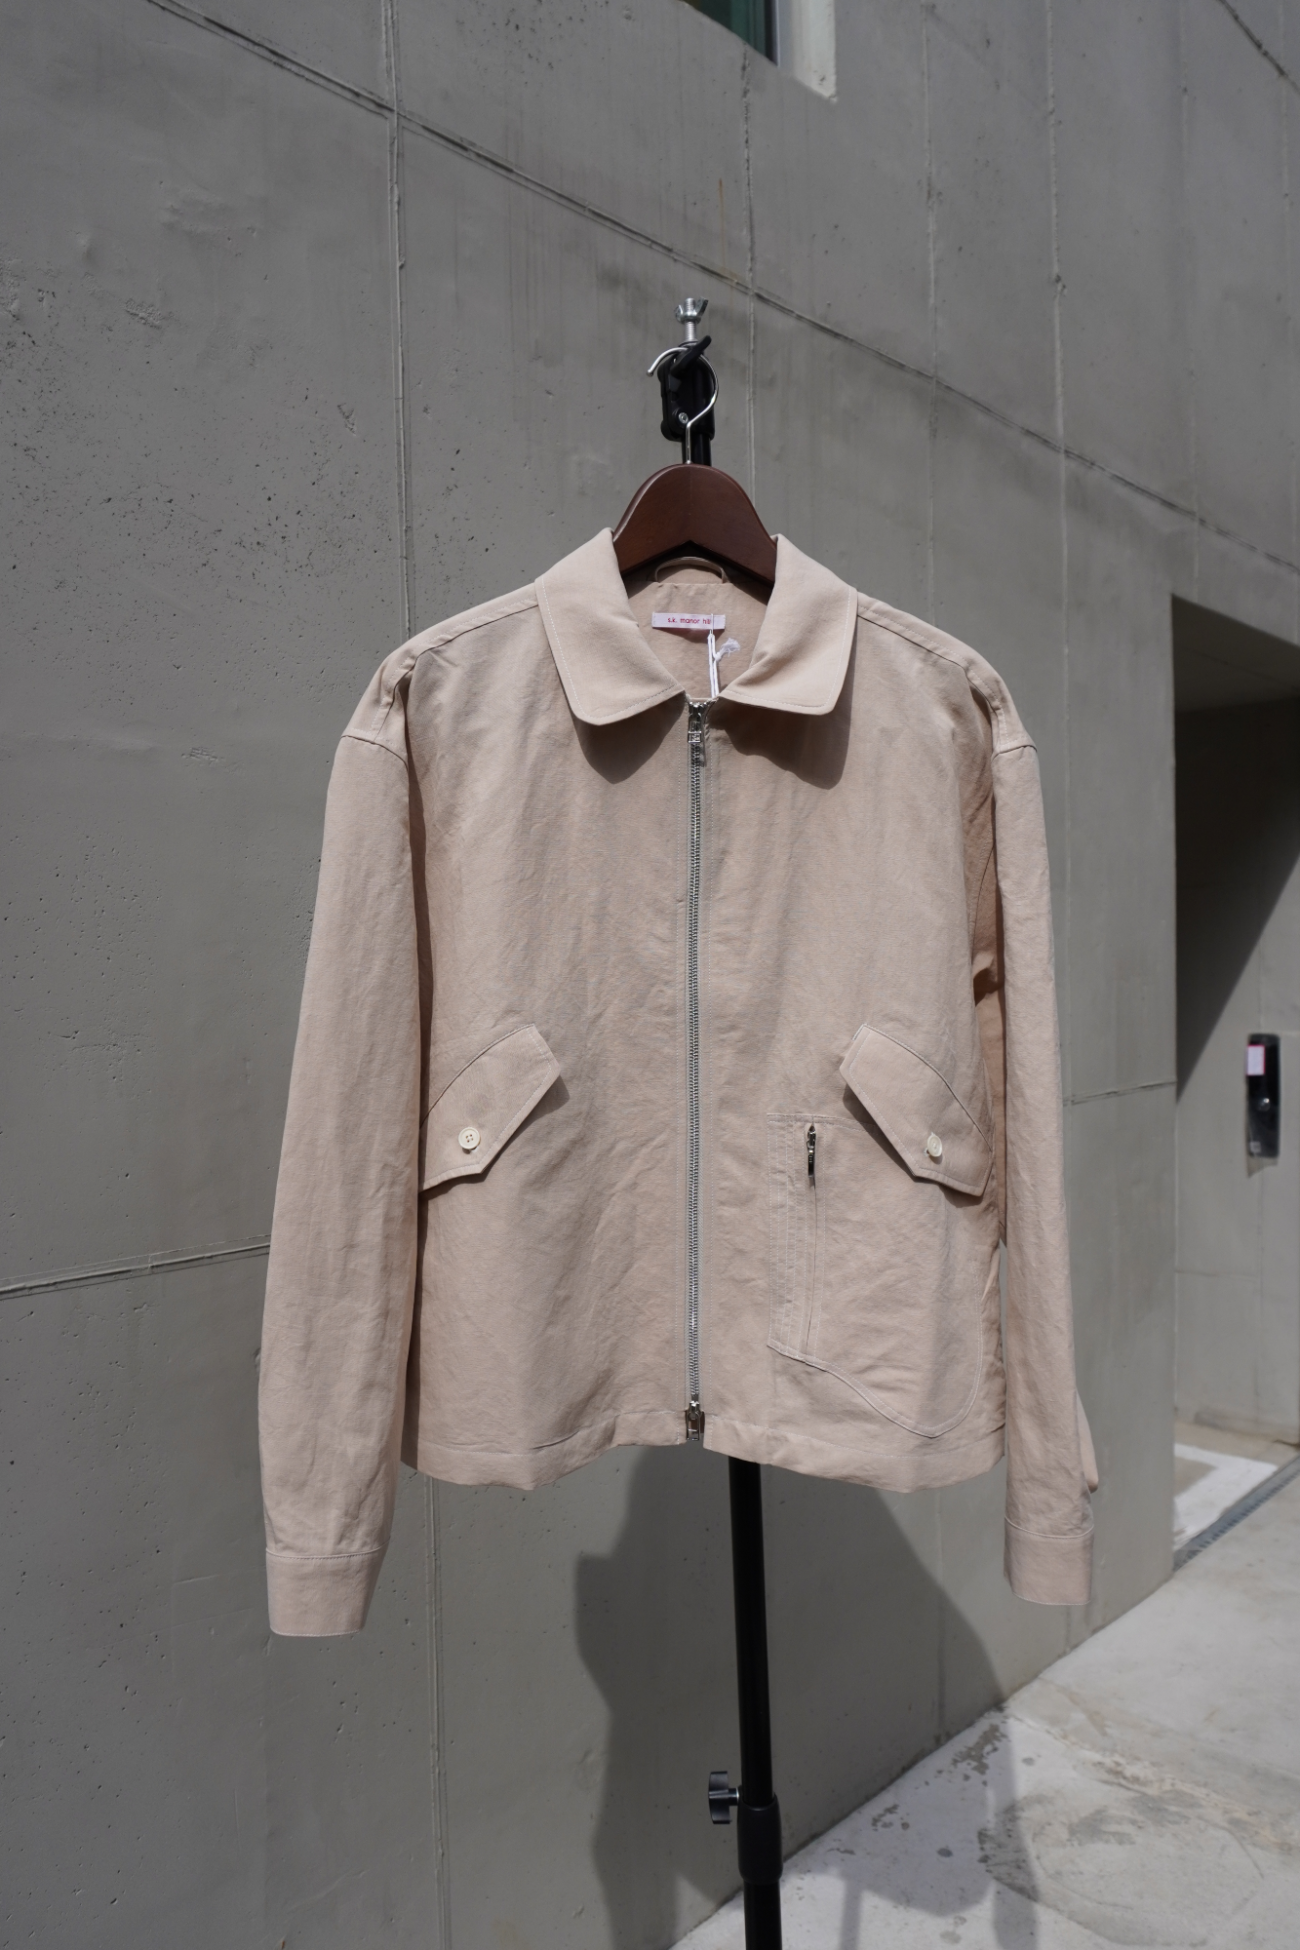 [S.K. MANOR HILL] Range Jacket - Beige Cotton/Linen